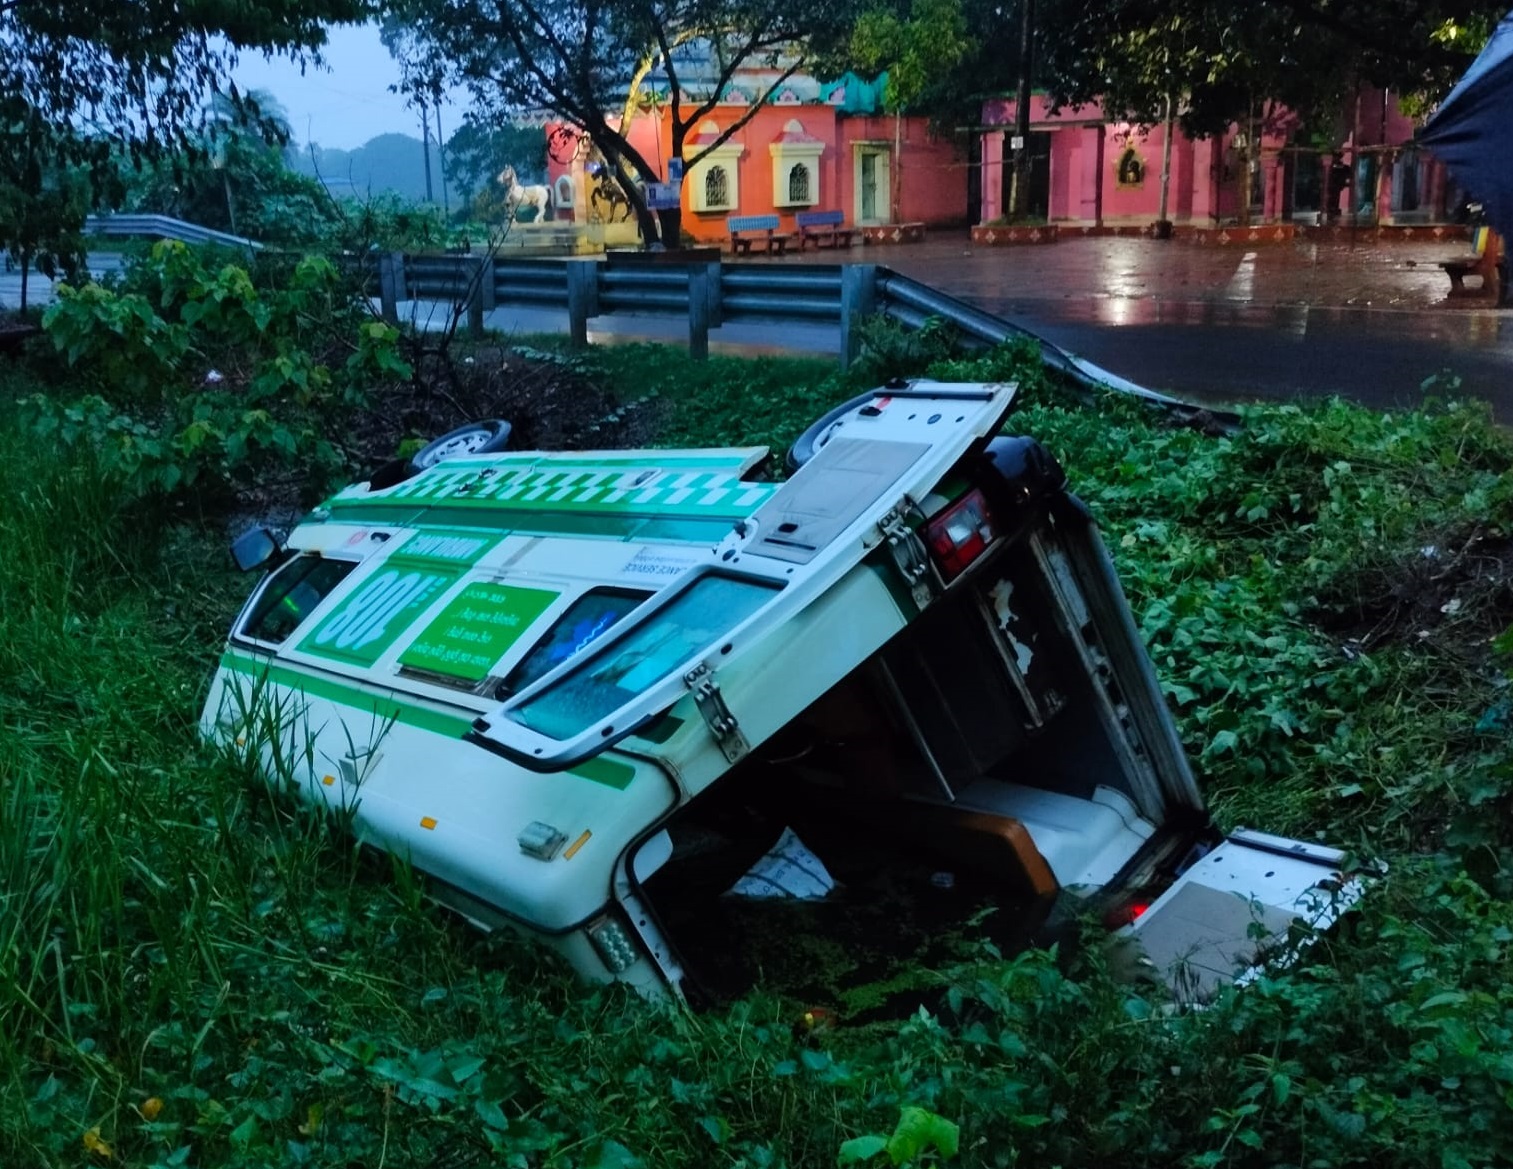 108 Ambulance Accident In Jajpur